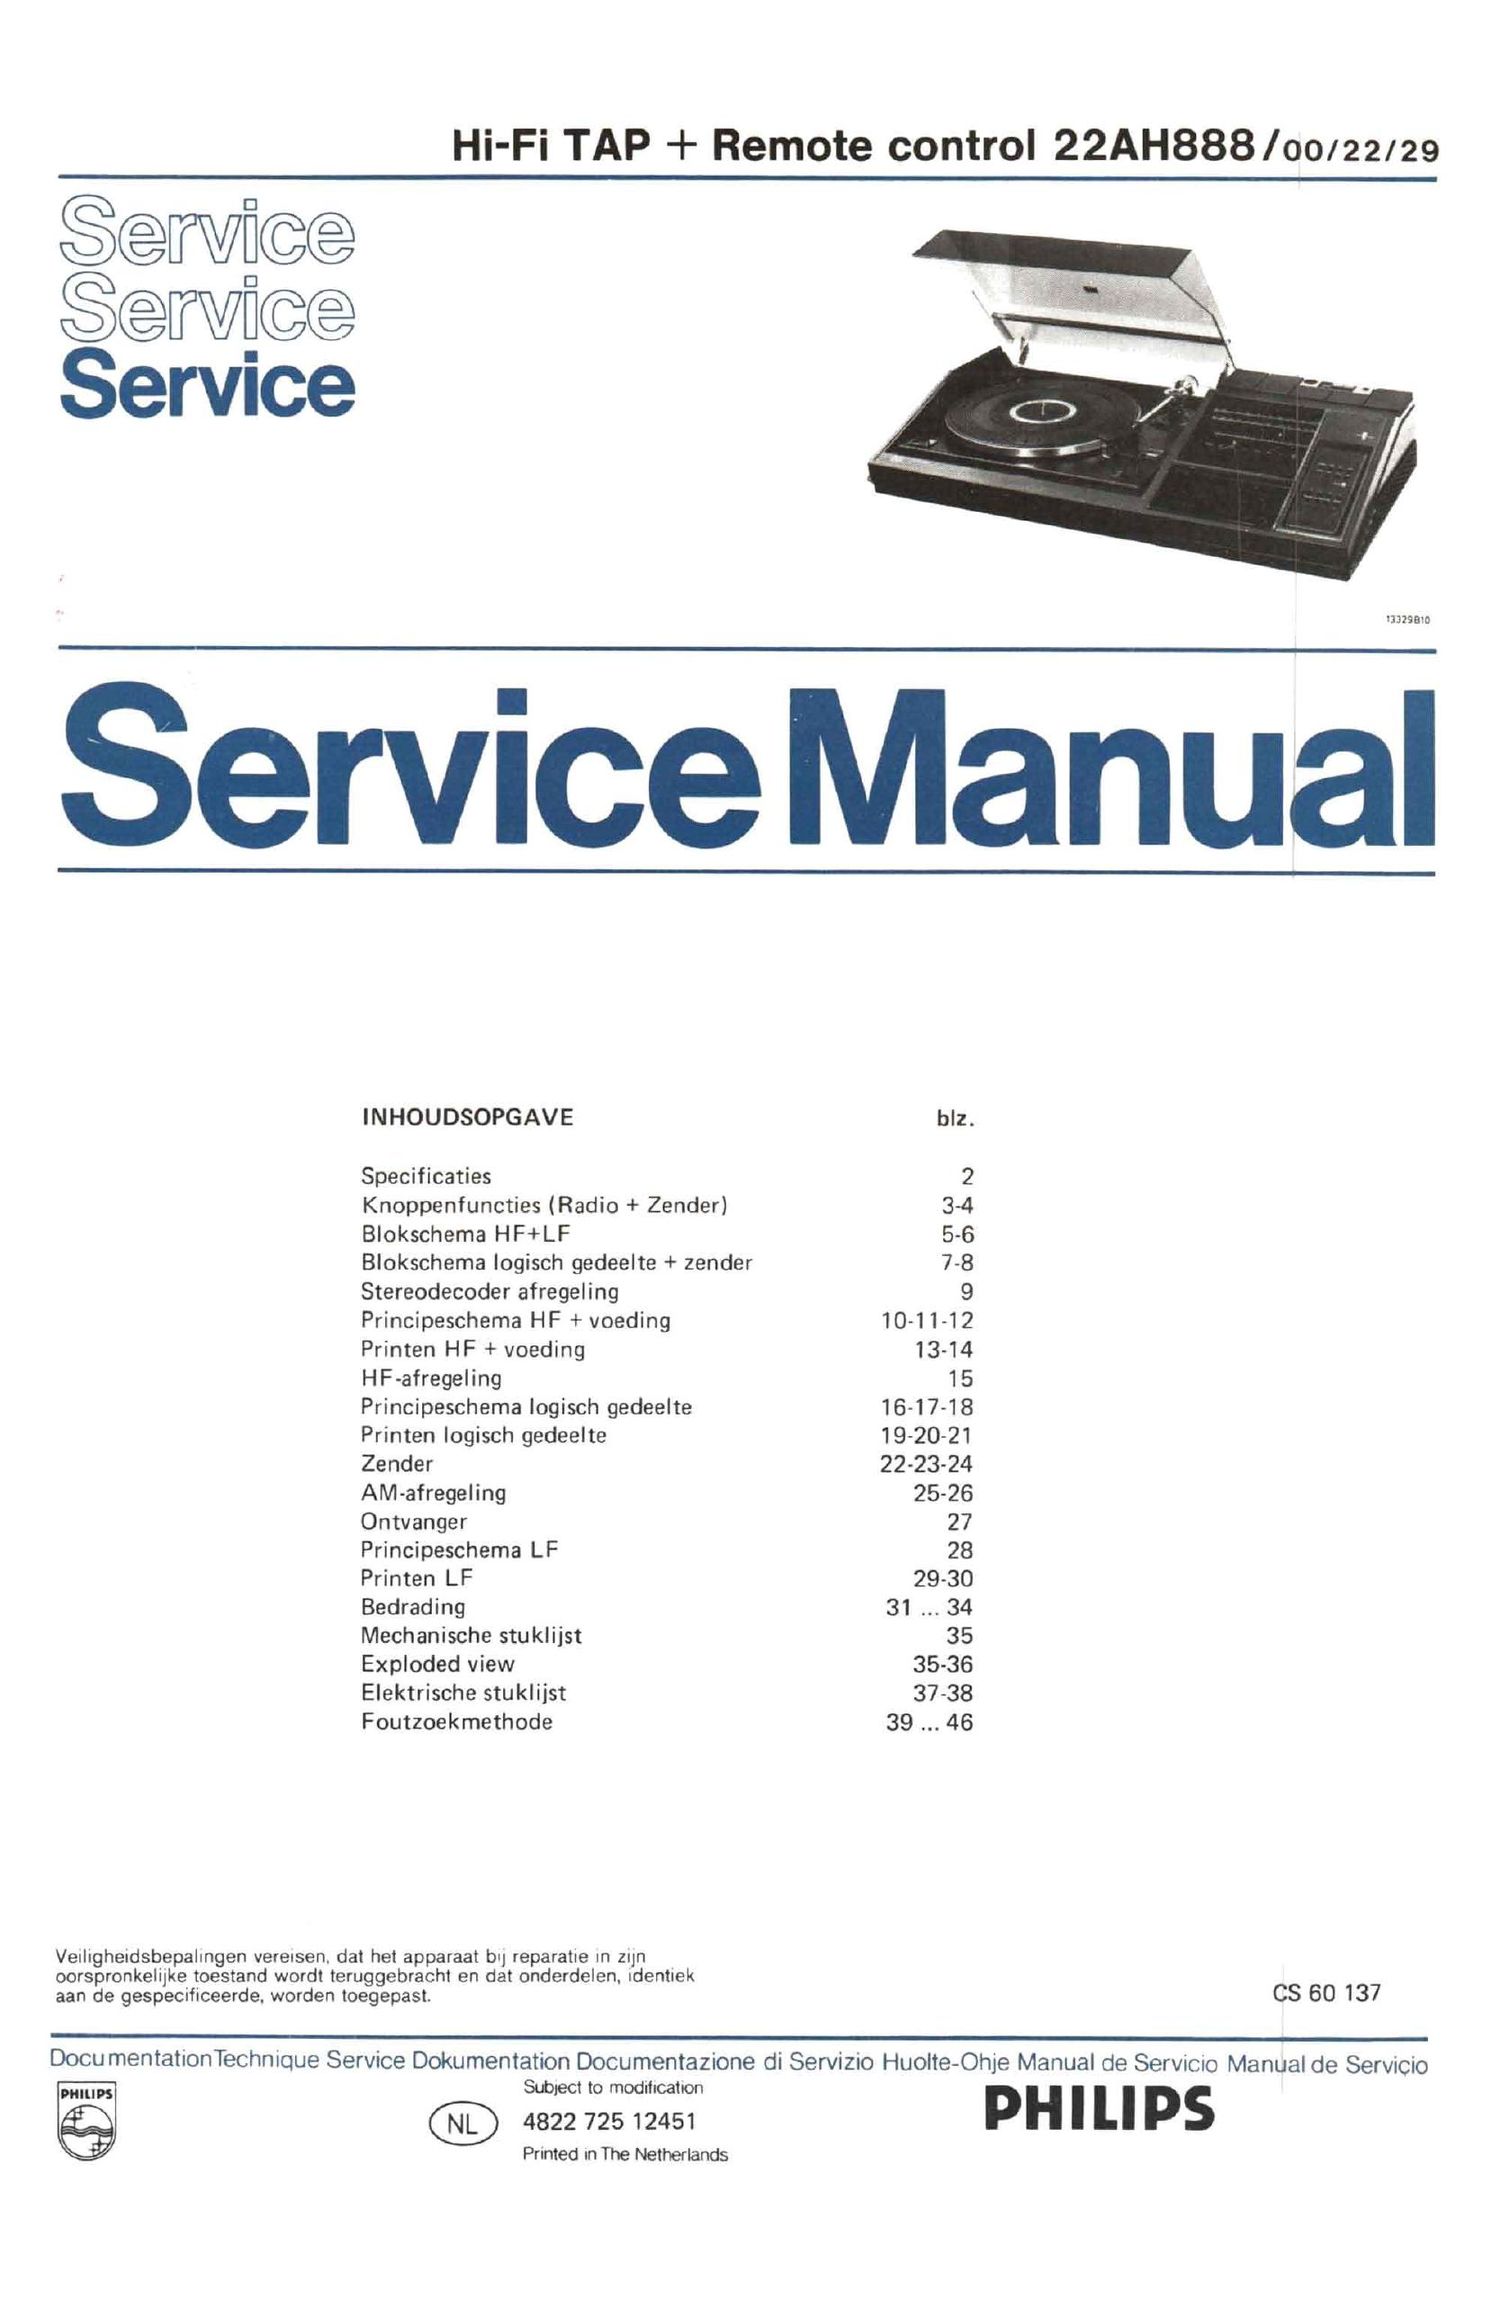 philips ah 888 service manual